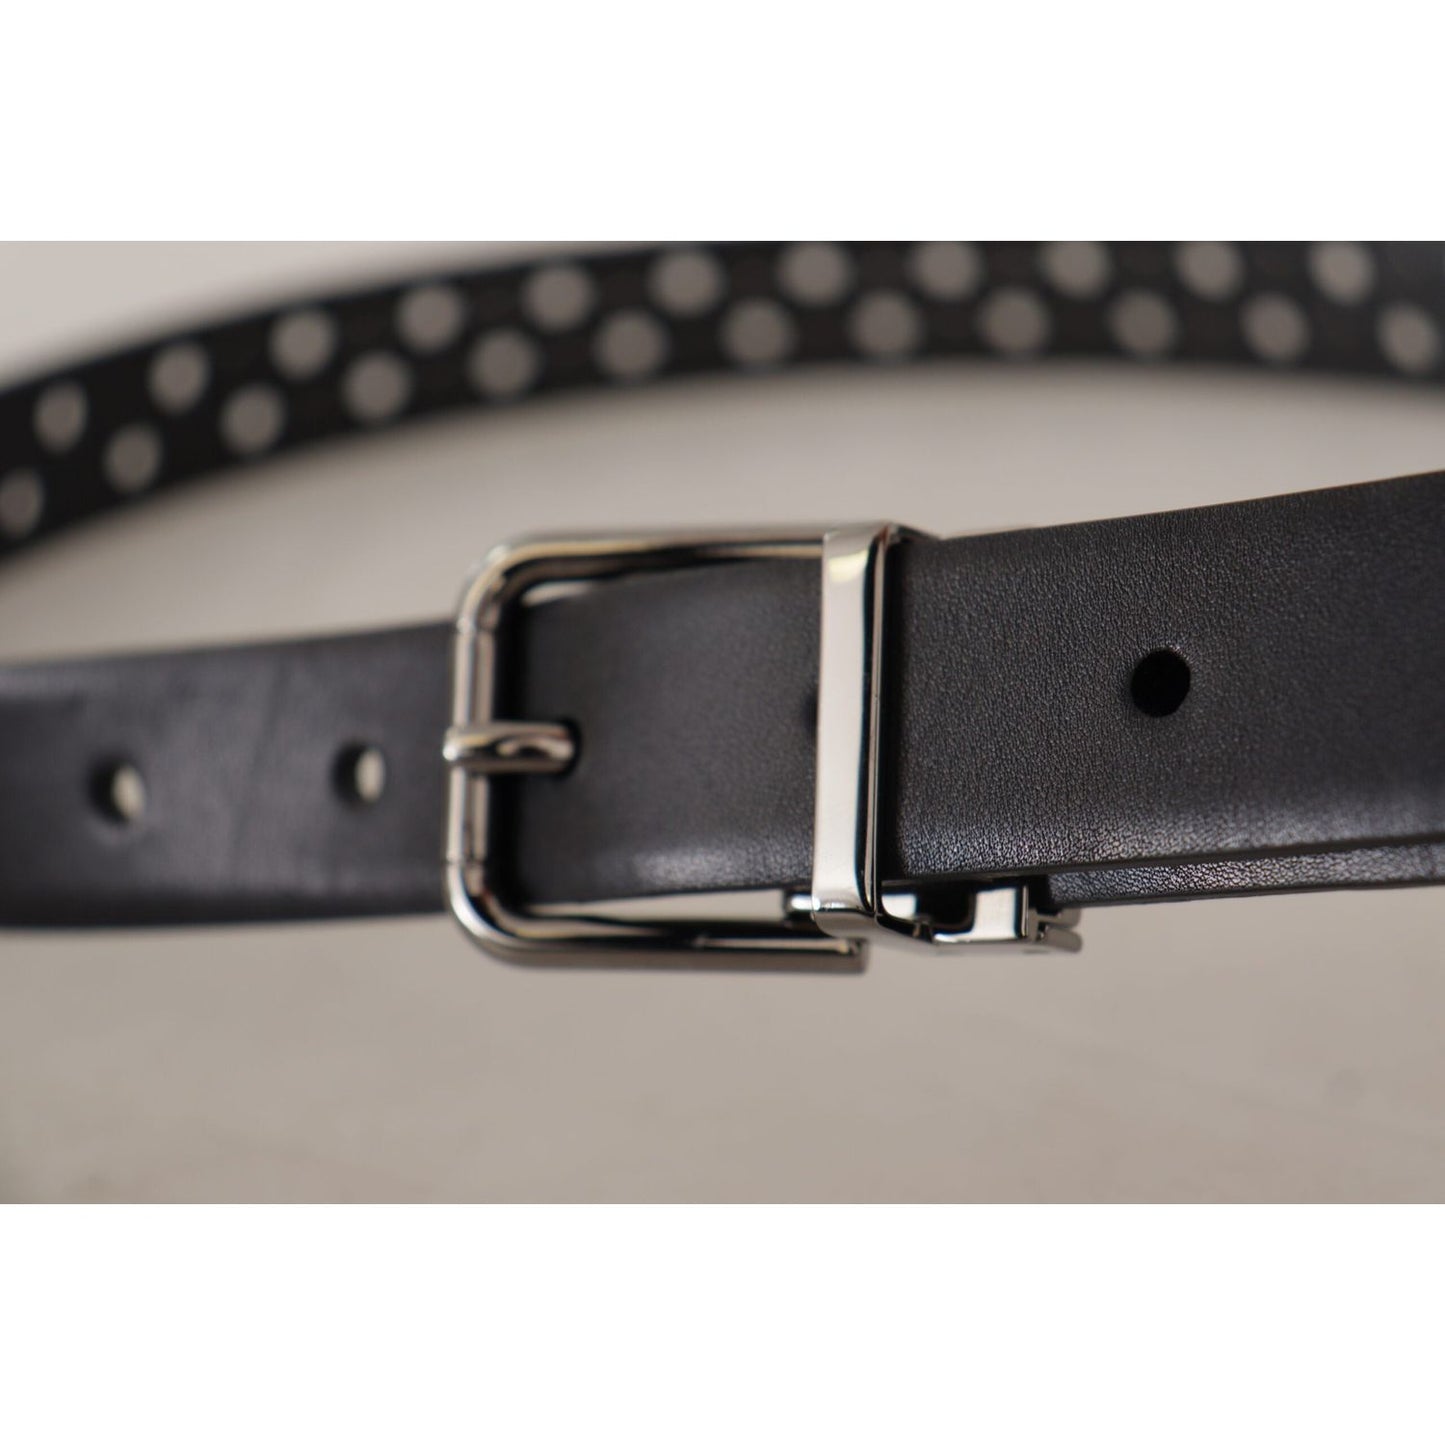 Dolce & Gabbana Elegant Black Leather Belt with Metal Buckle black-calf-leather-perforated-metal-buckle-belt